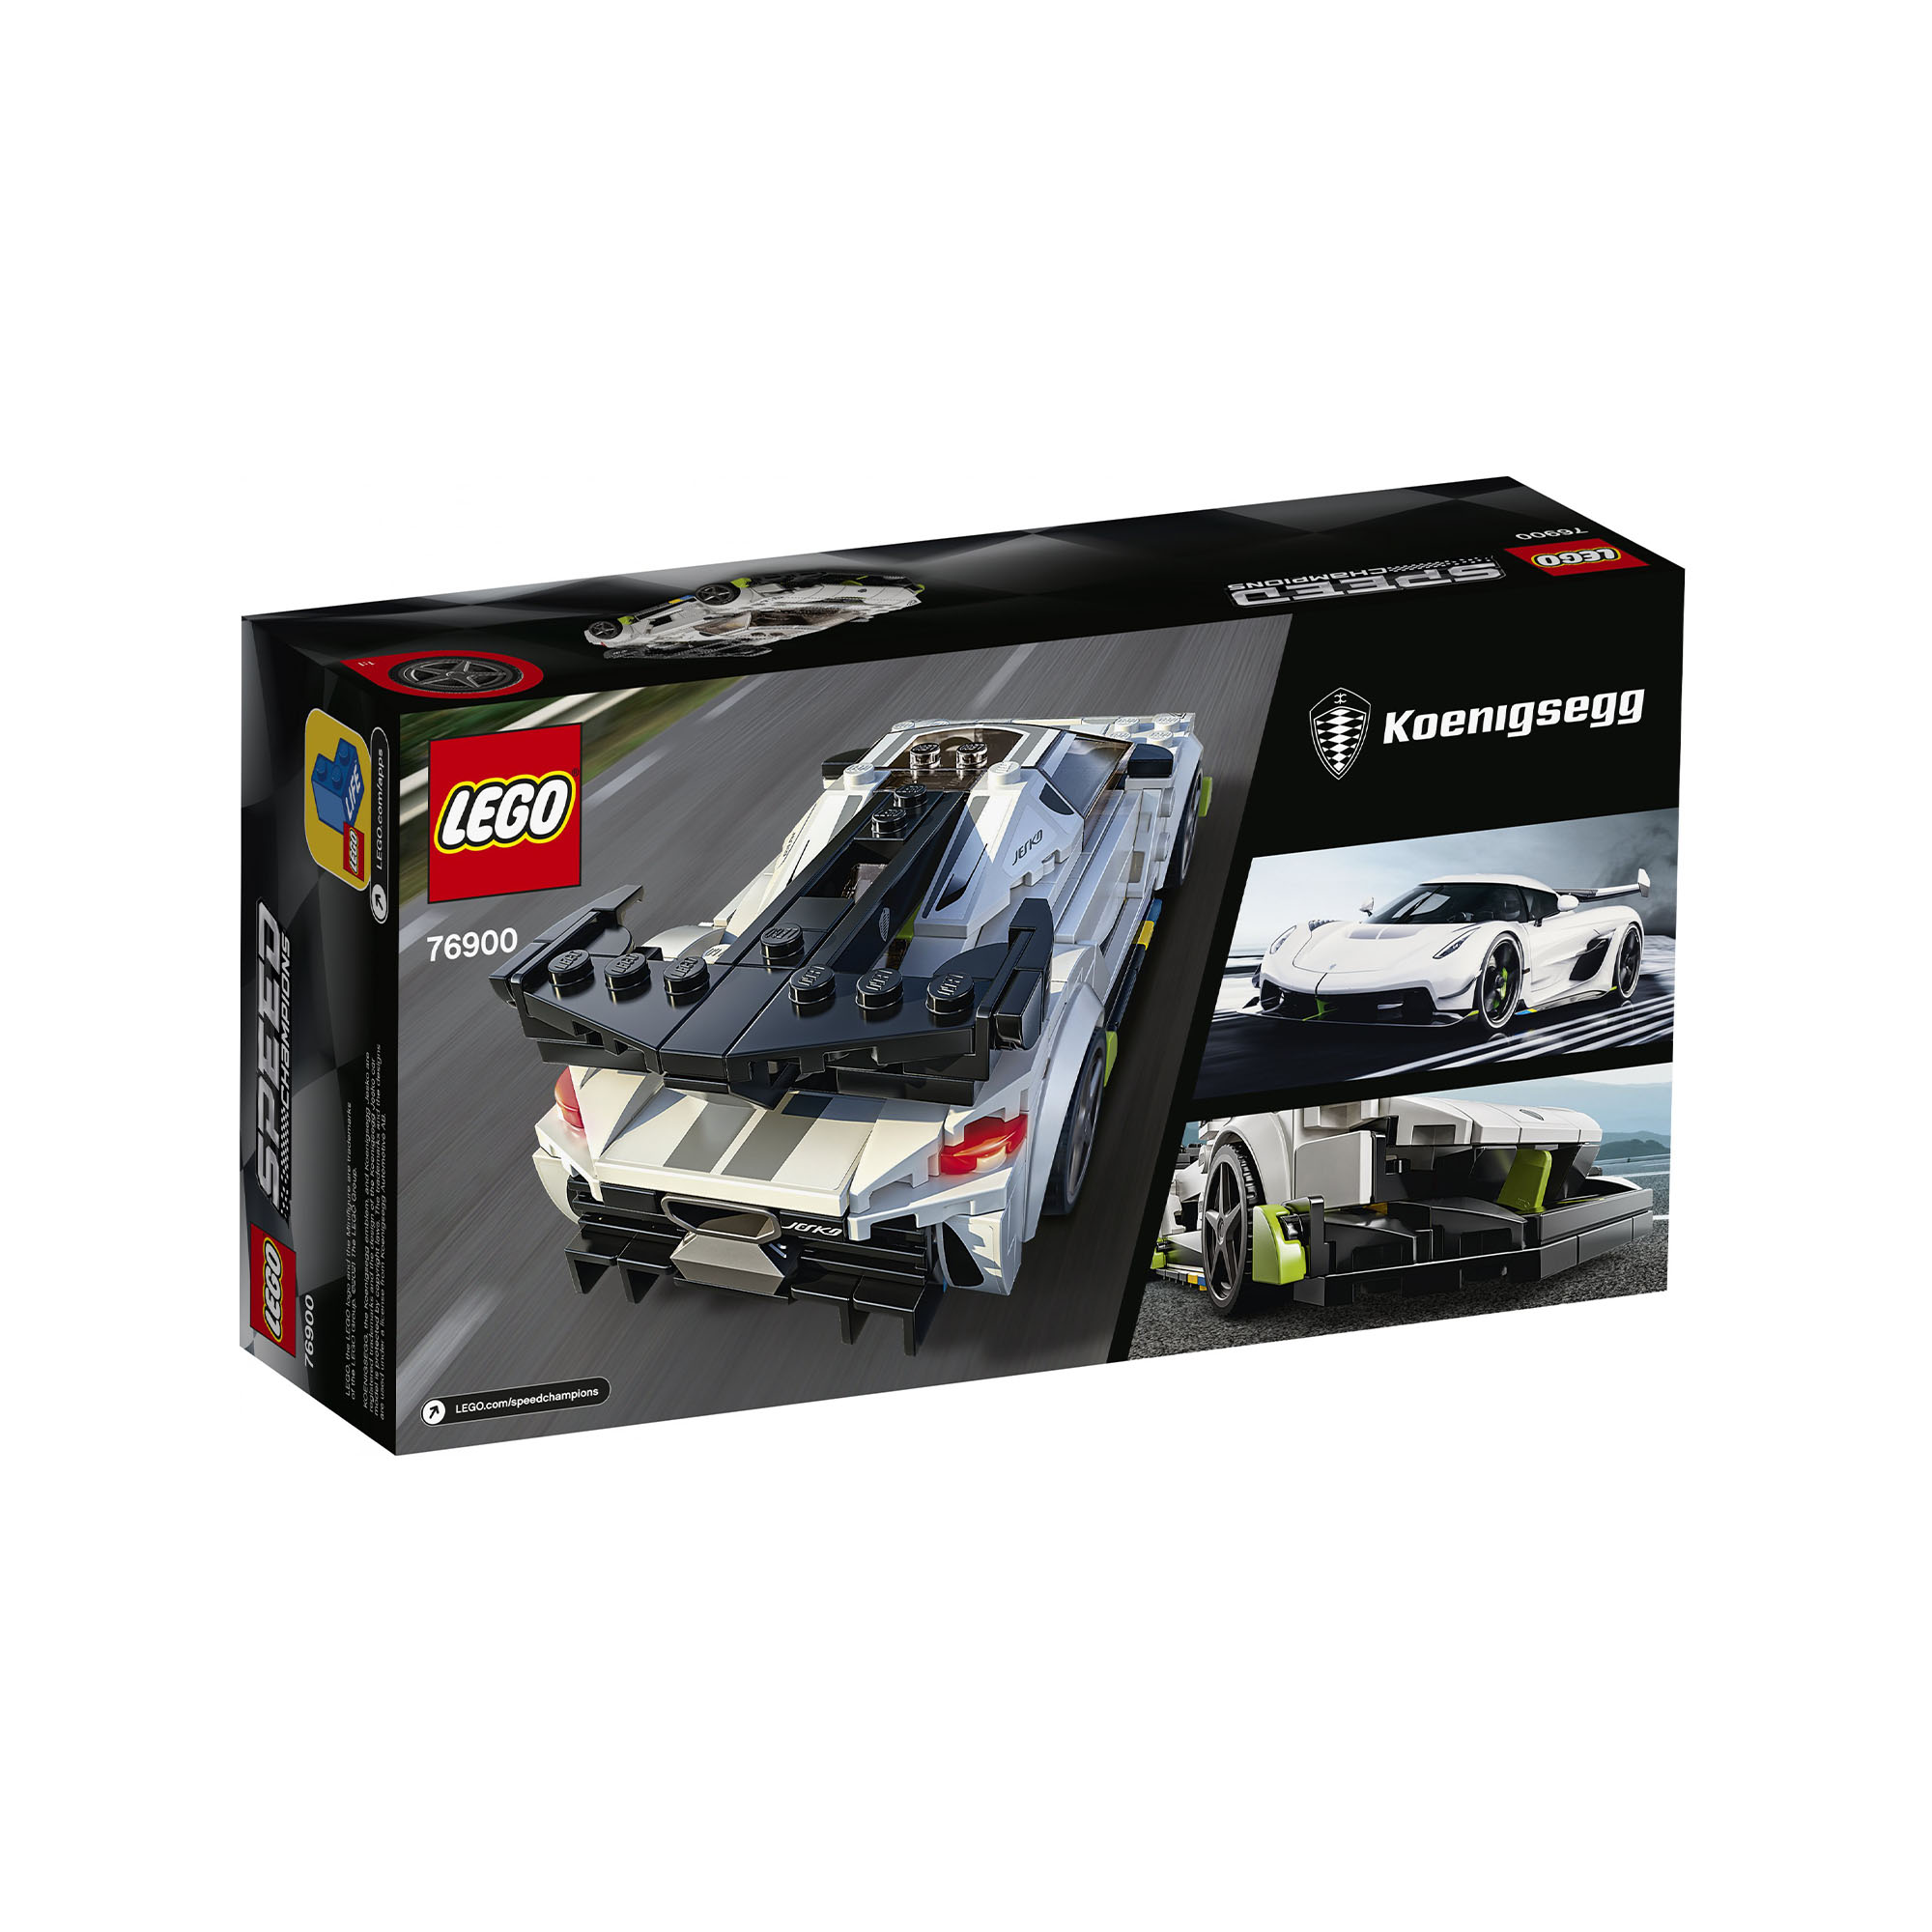 LEGO Speed Champions Koenigsegg Jesko, Auto Sportiva con Minifigure del Pilota,  76900, , large